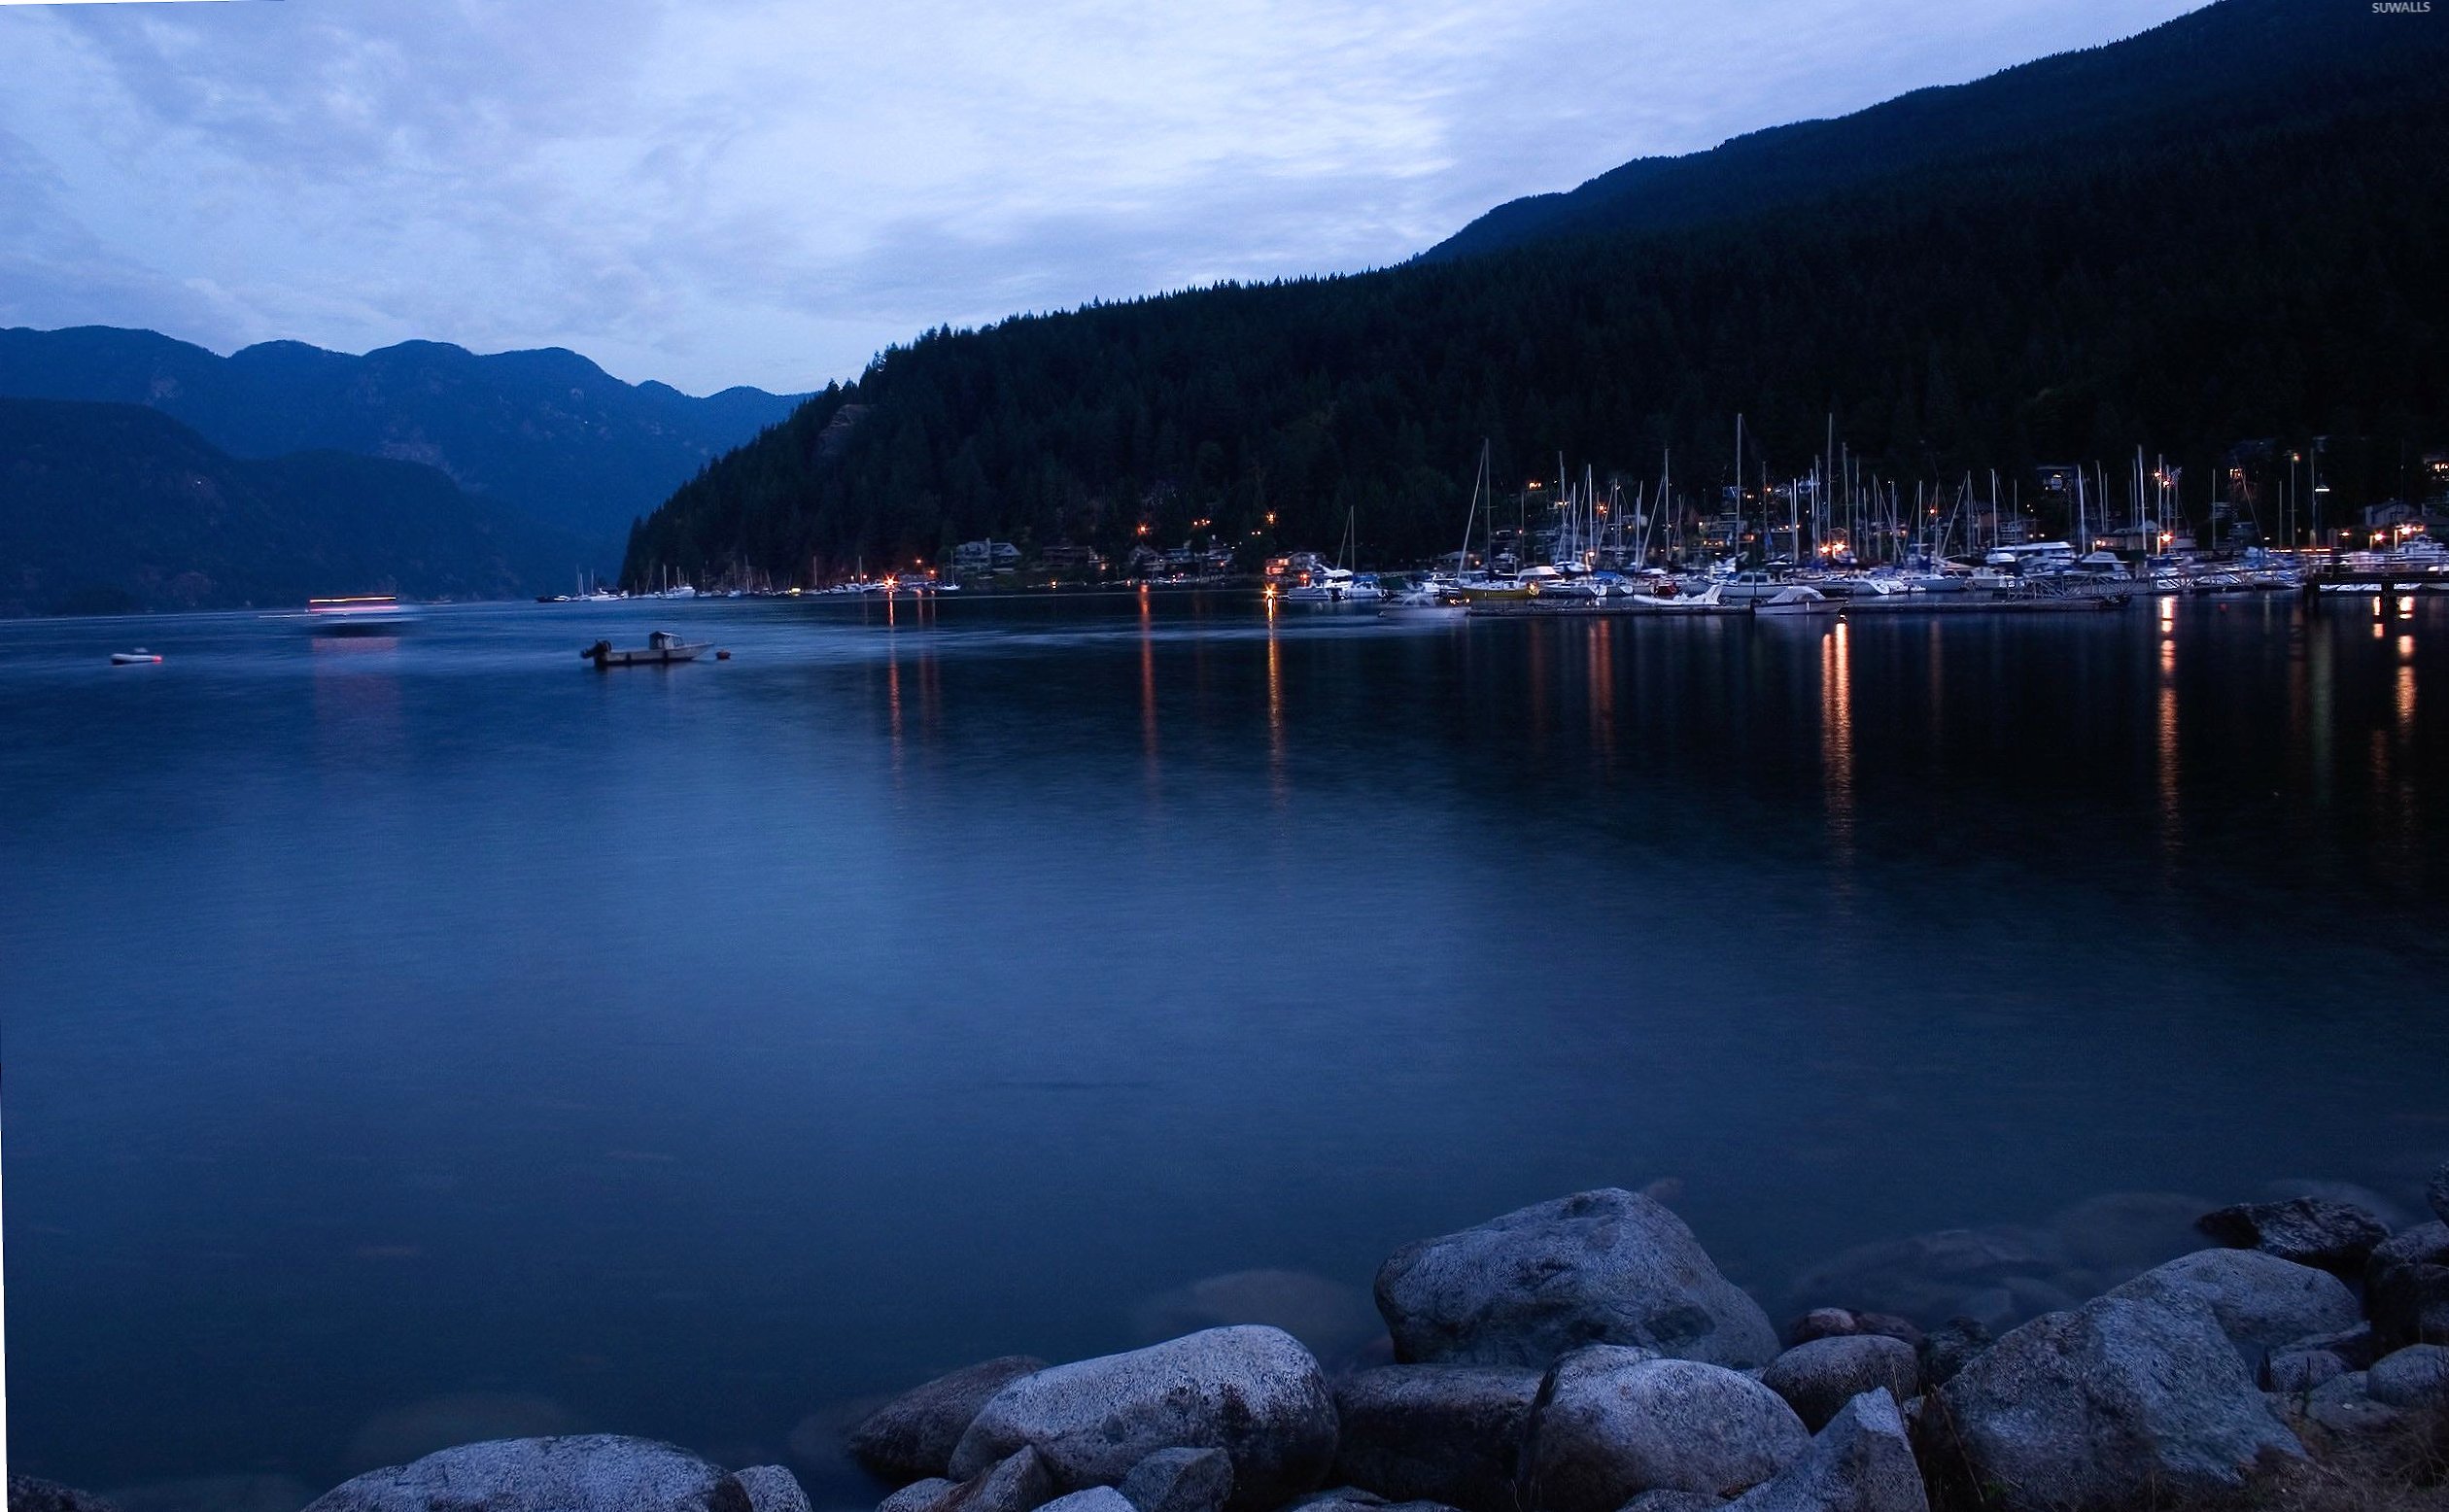 Harbor at night at 1024 x 1024 iPad size wallpapers HD quality